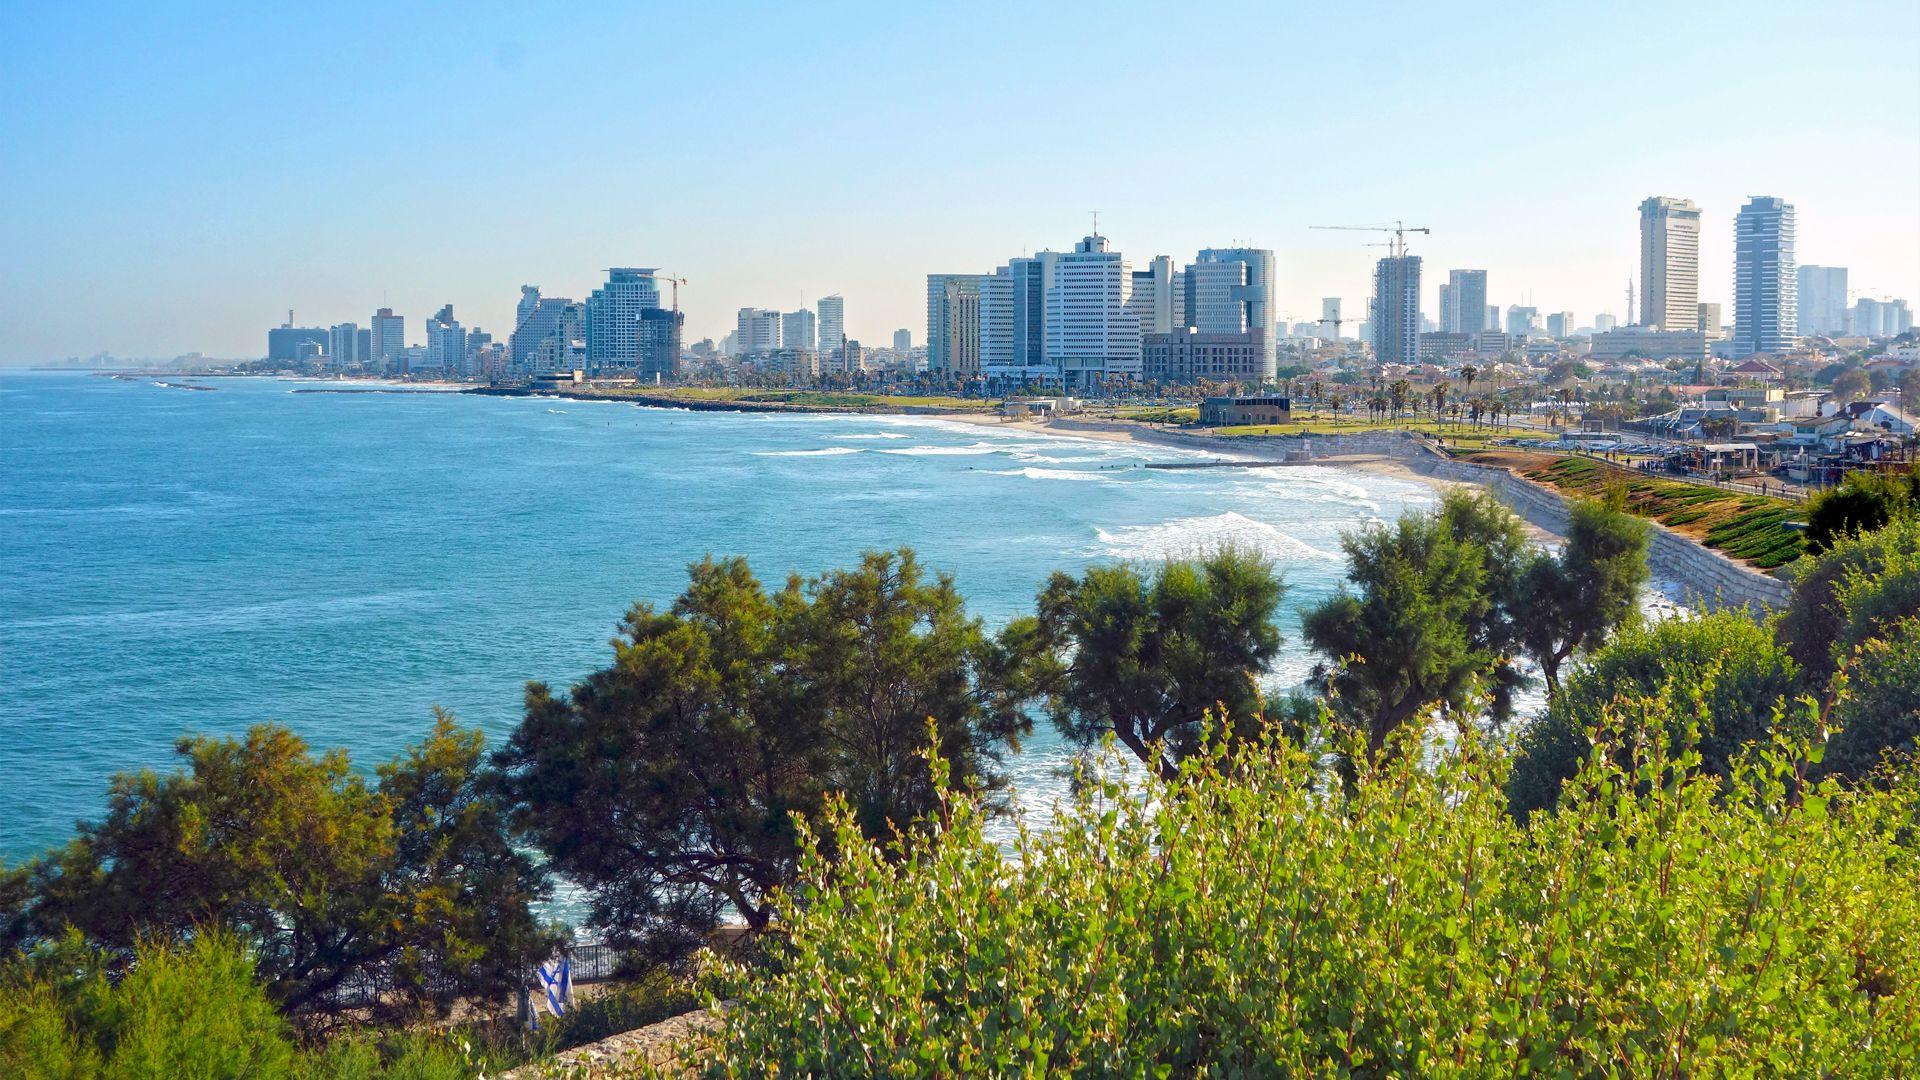 Rick Steves' Europe Aviv, Israel: Beautiful Beaches and Tasty